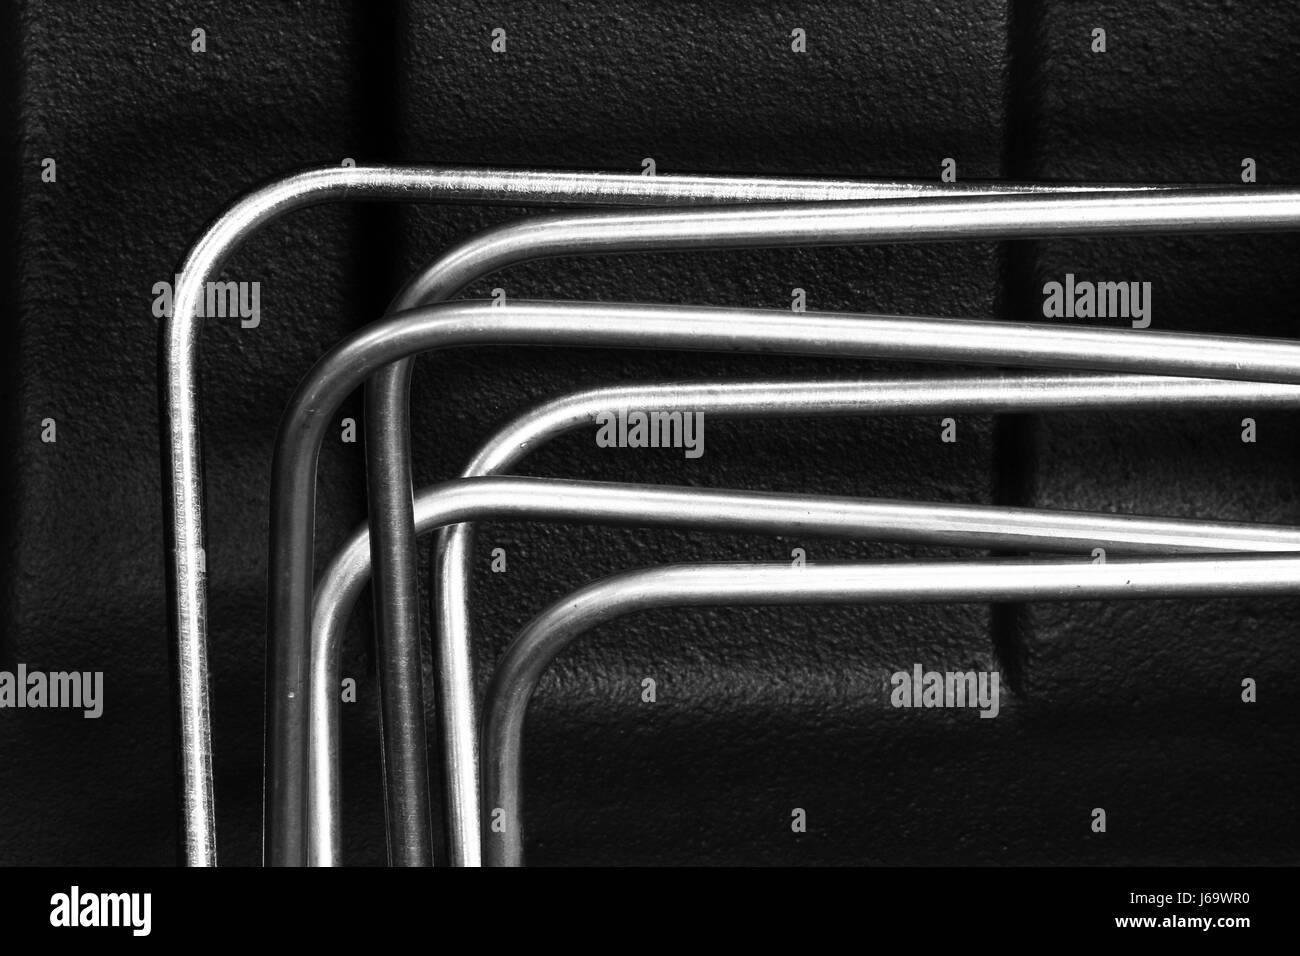 arrangement rail metal barrier element implement rod metallic curve crooked Stock Photo